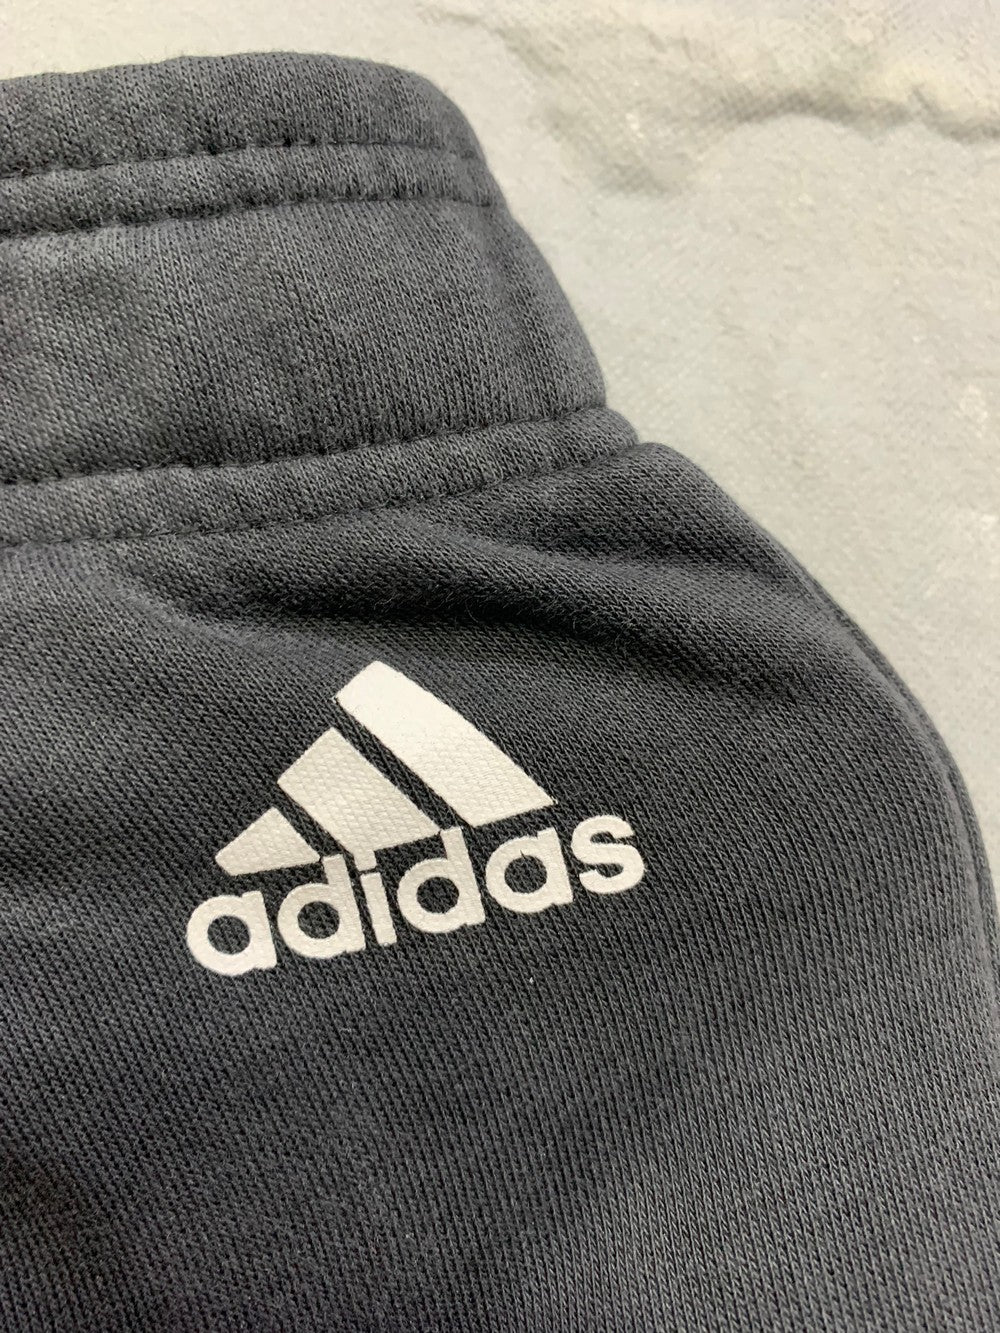 Adidas Branded Original Fleece Winter Trouser For Men